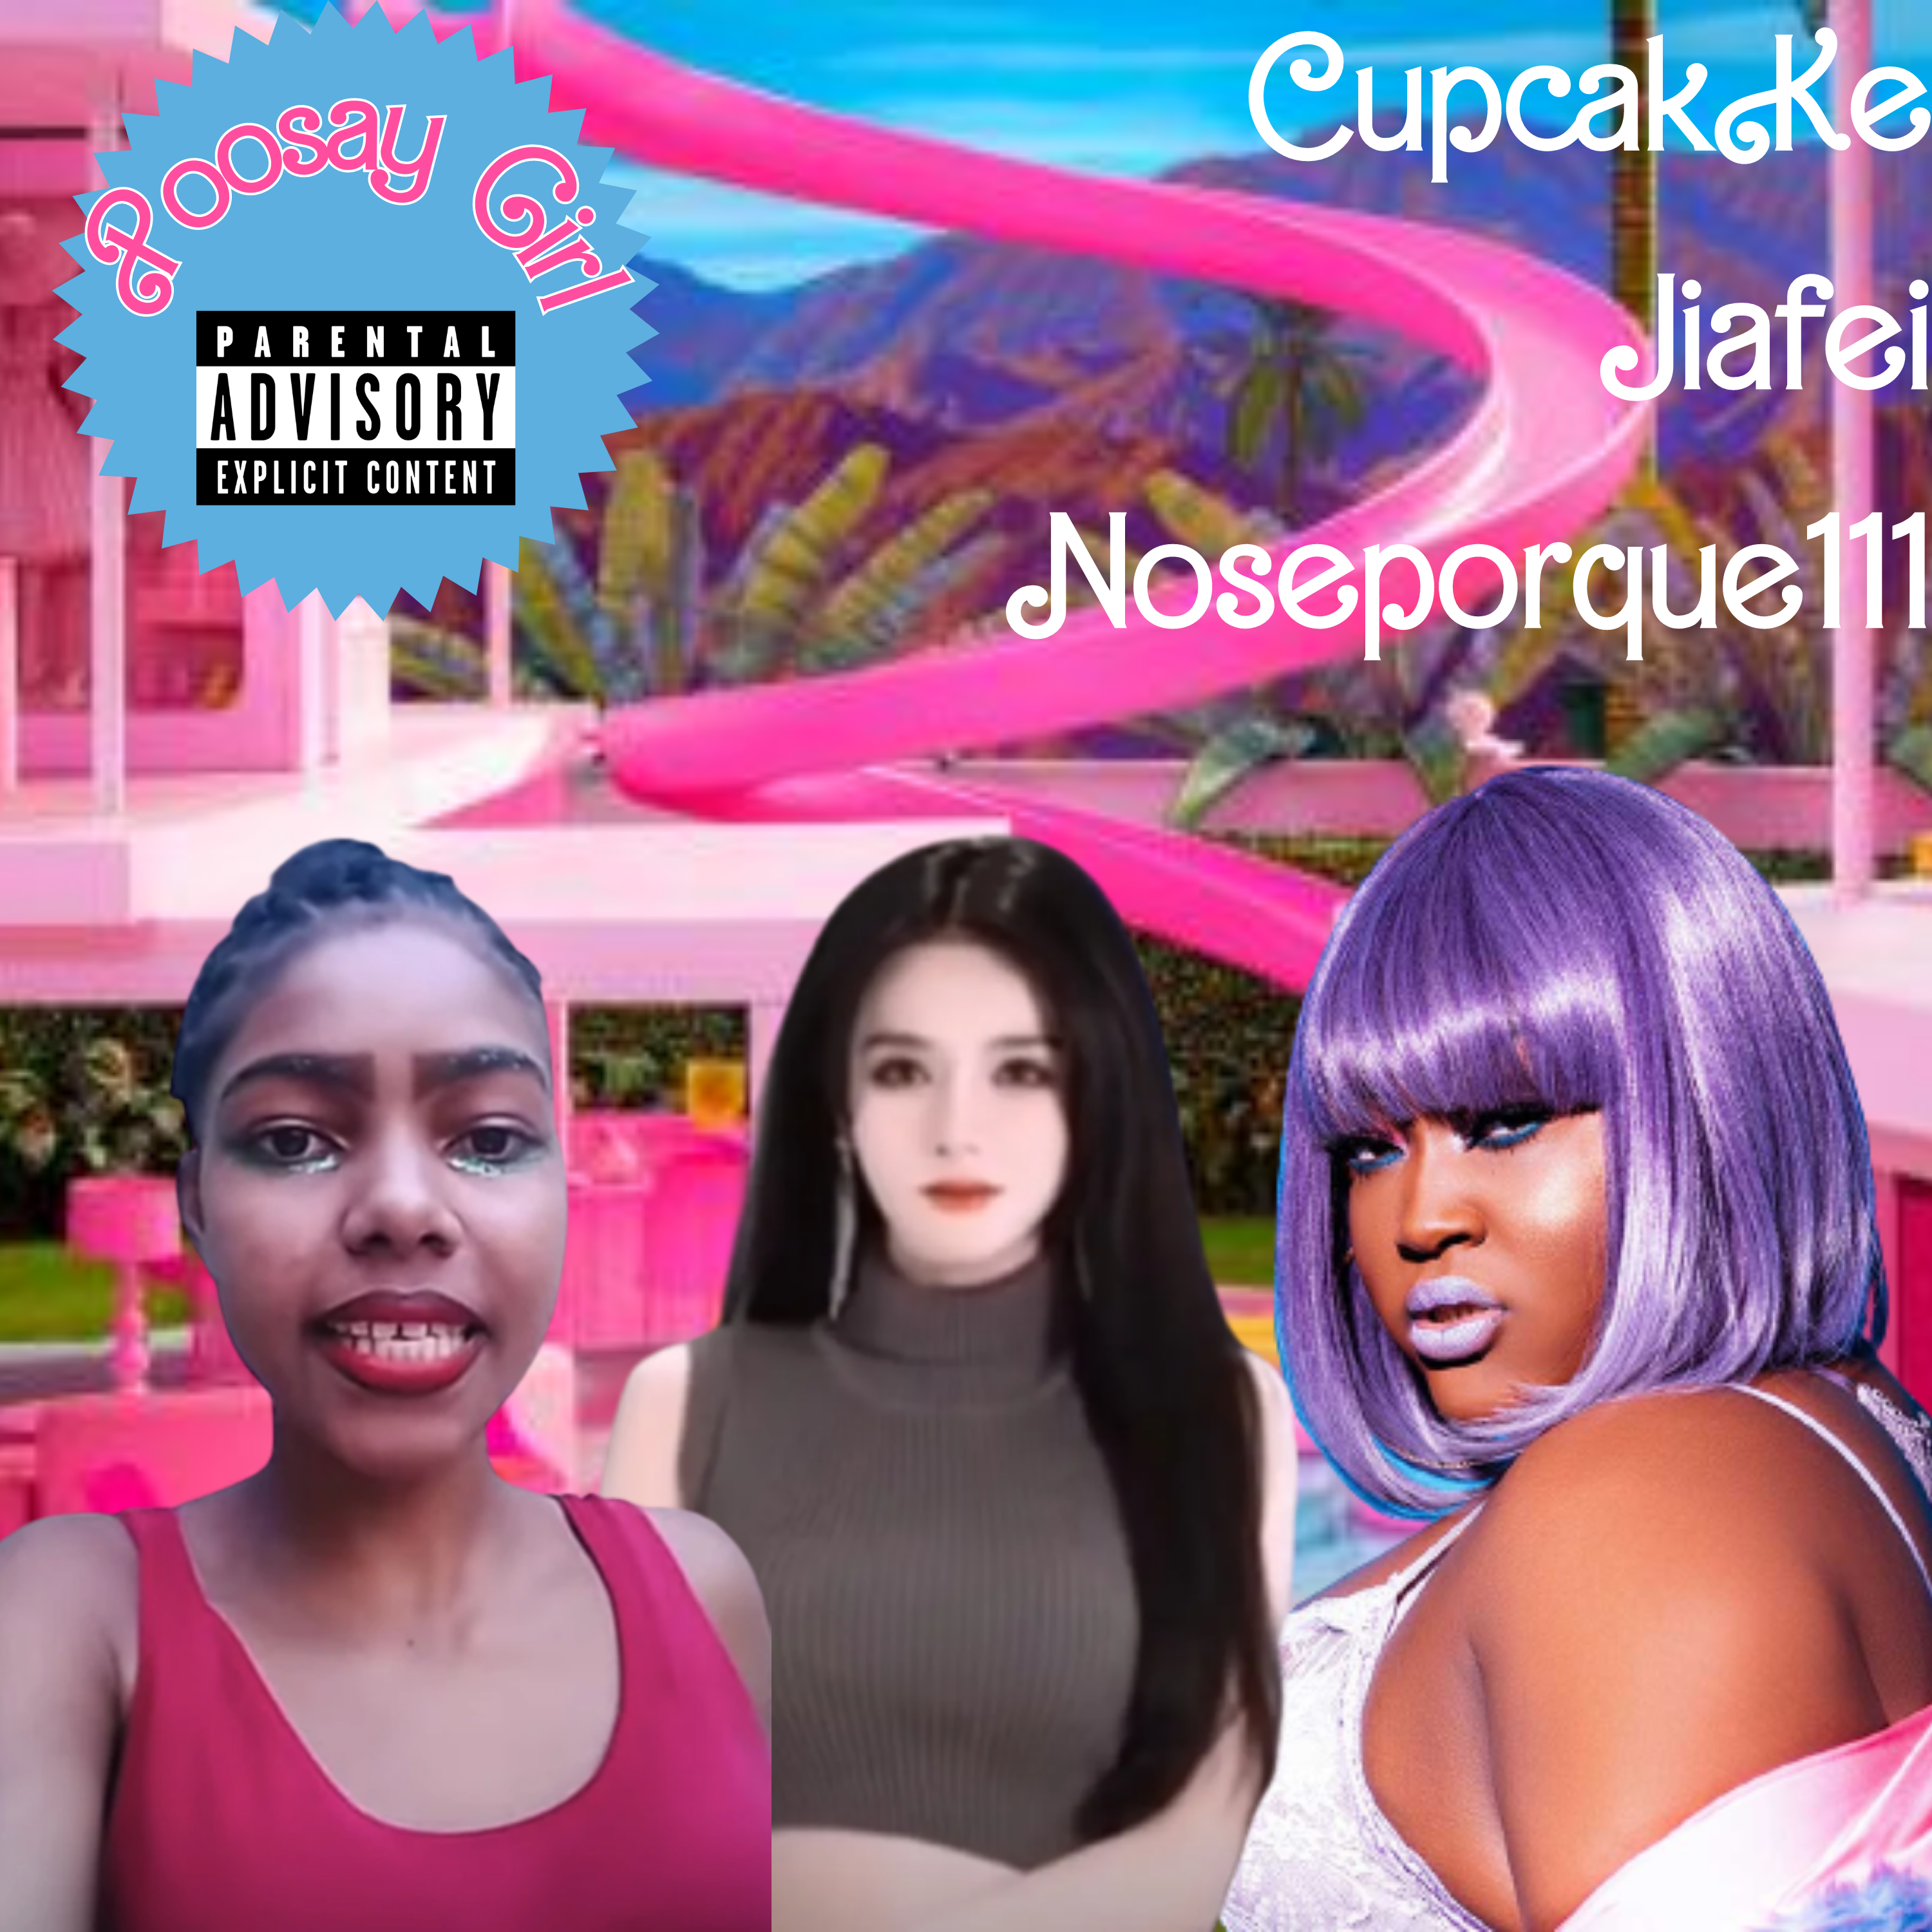 Dawn Medrek, CupcakKe, Jiafei, & Noseporque111 featuring Cast - Celebrity Parodies — Poosay Girl cover artwork